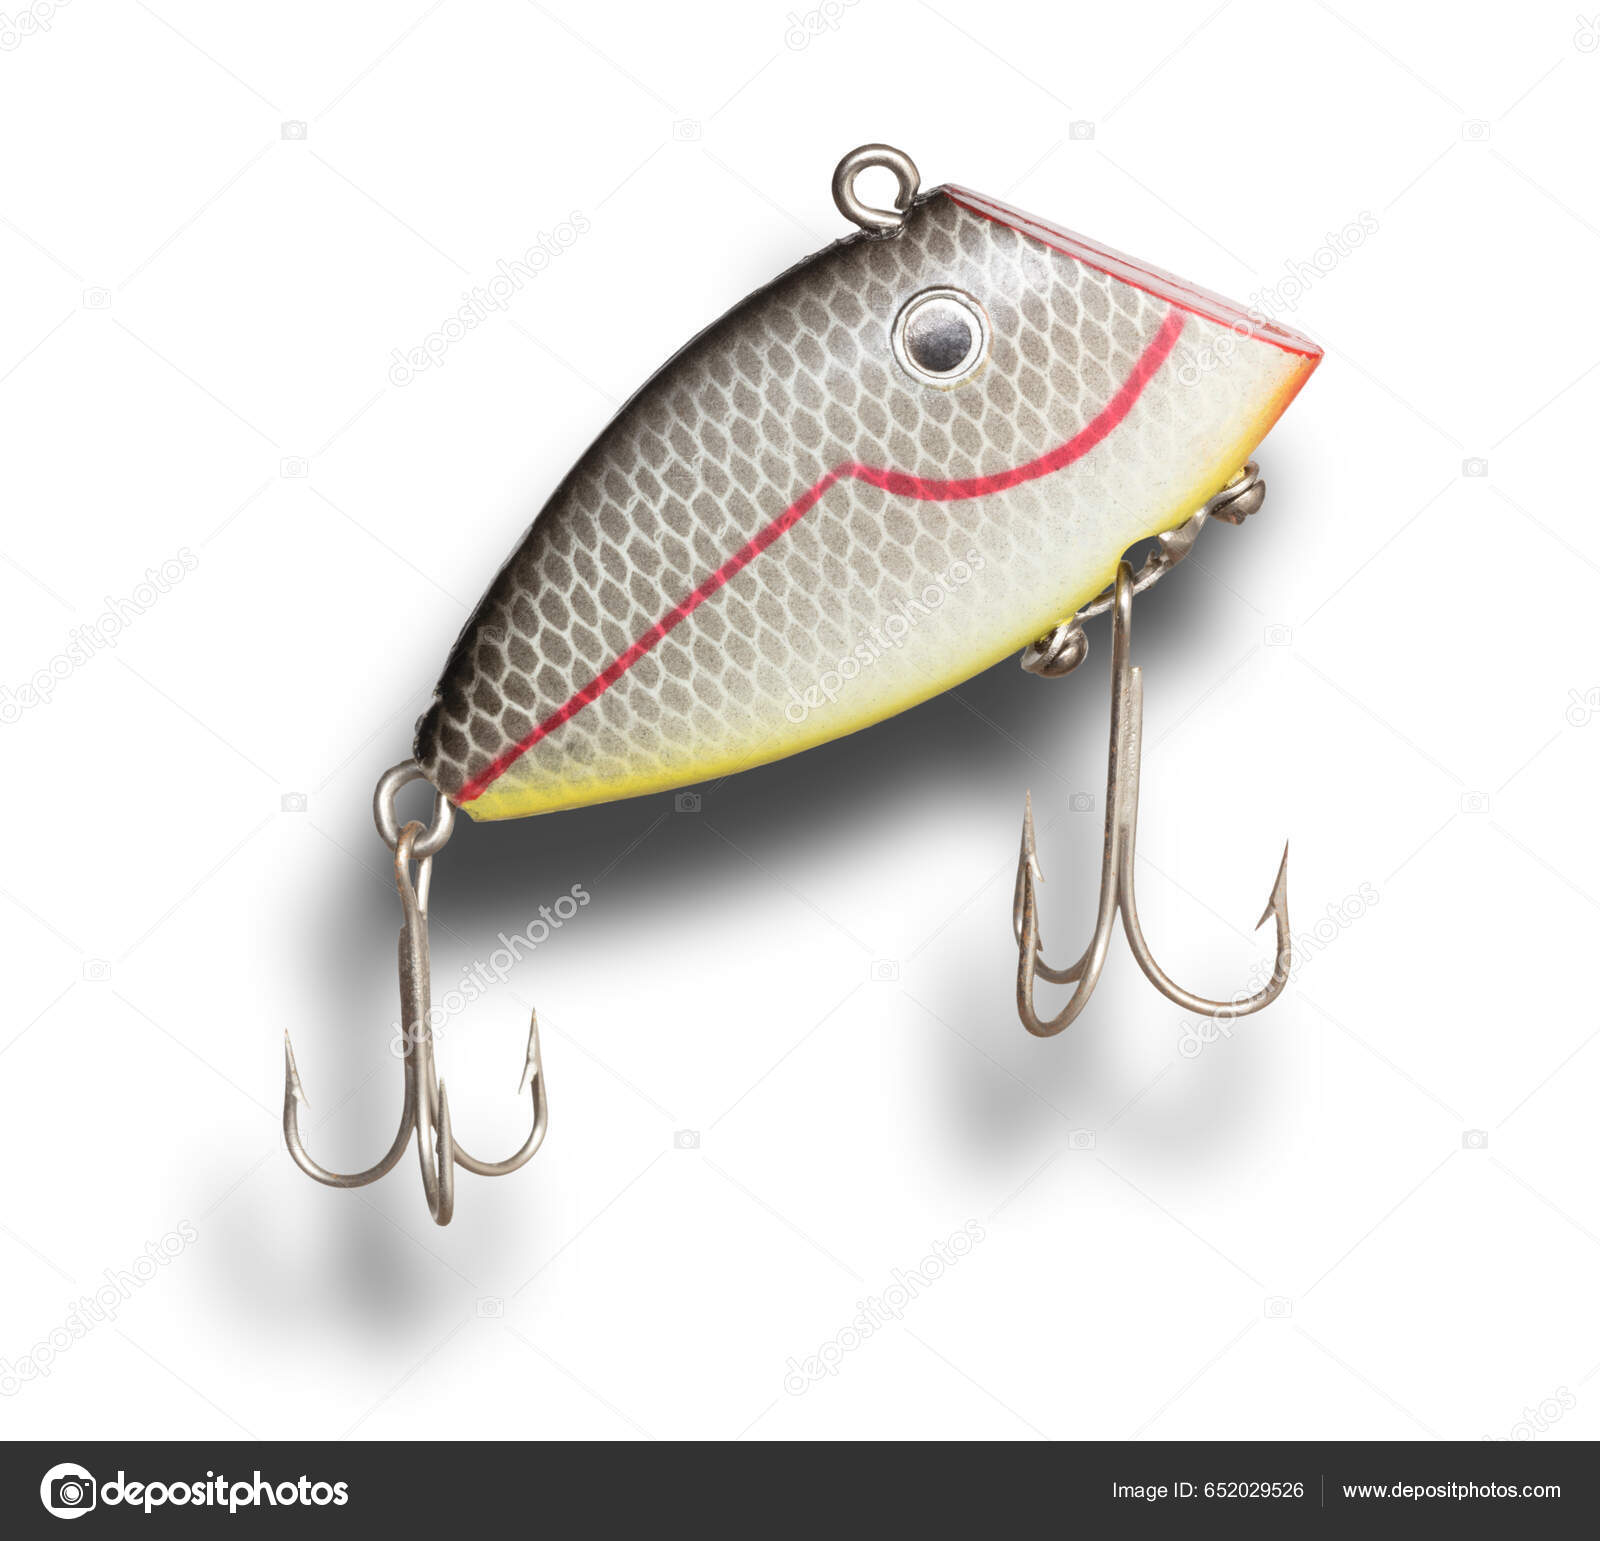 https://st5.depositphotos.com/3504545/65202/i/1600/depositphotos_652029526-stock-photo-flat-front-articifial-fishing-lure.jpg